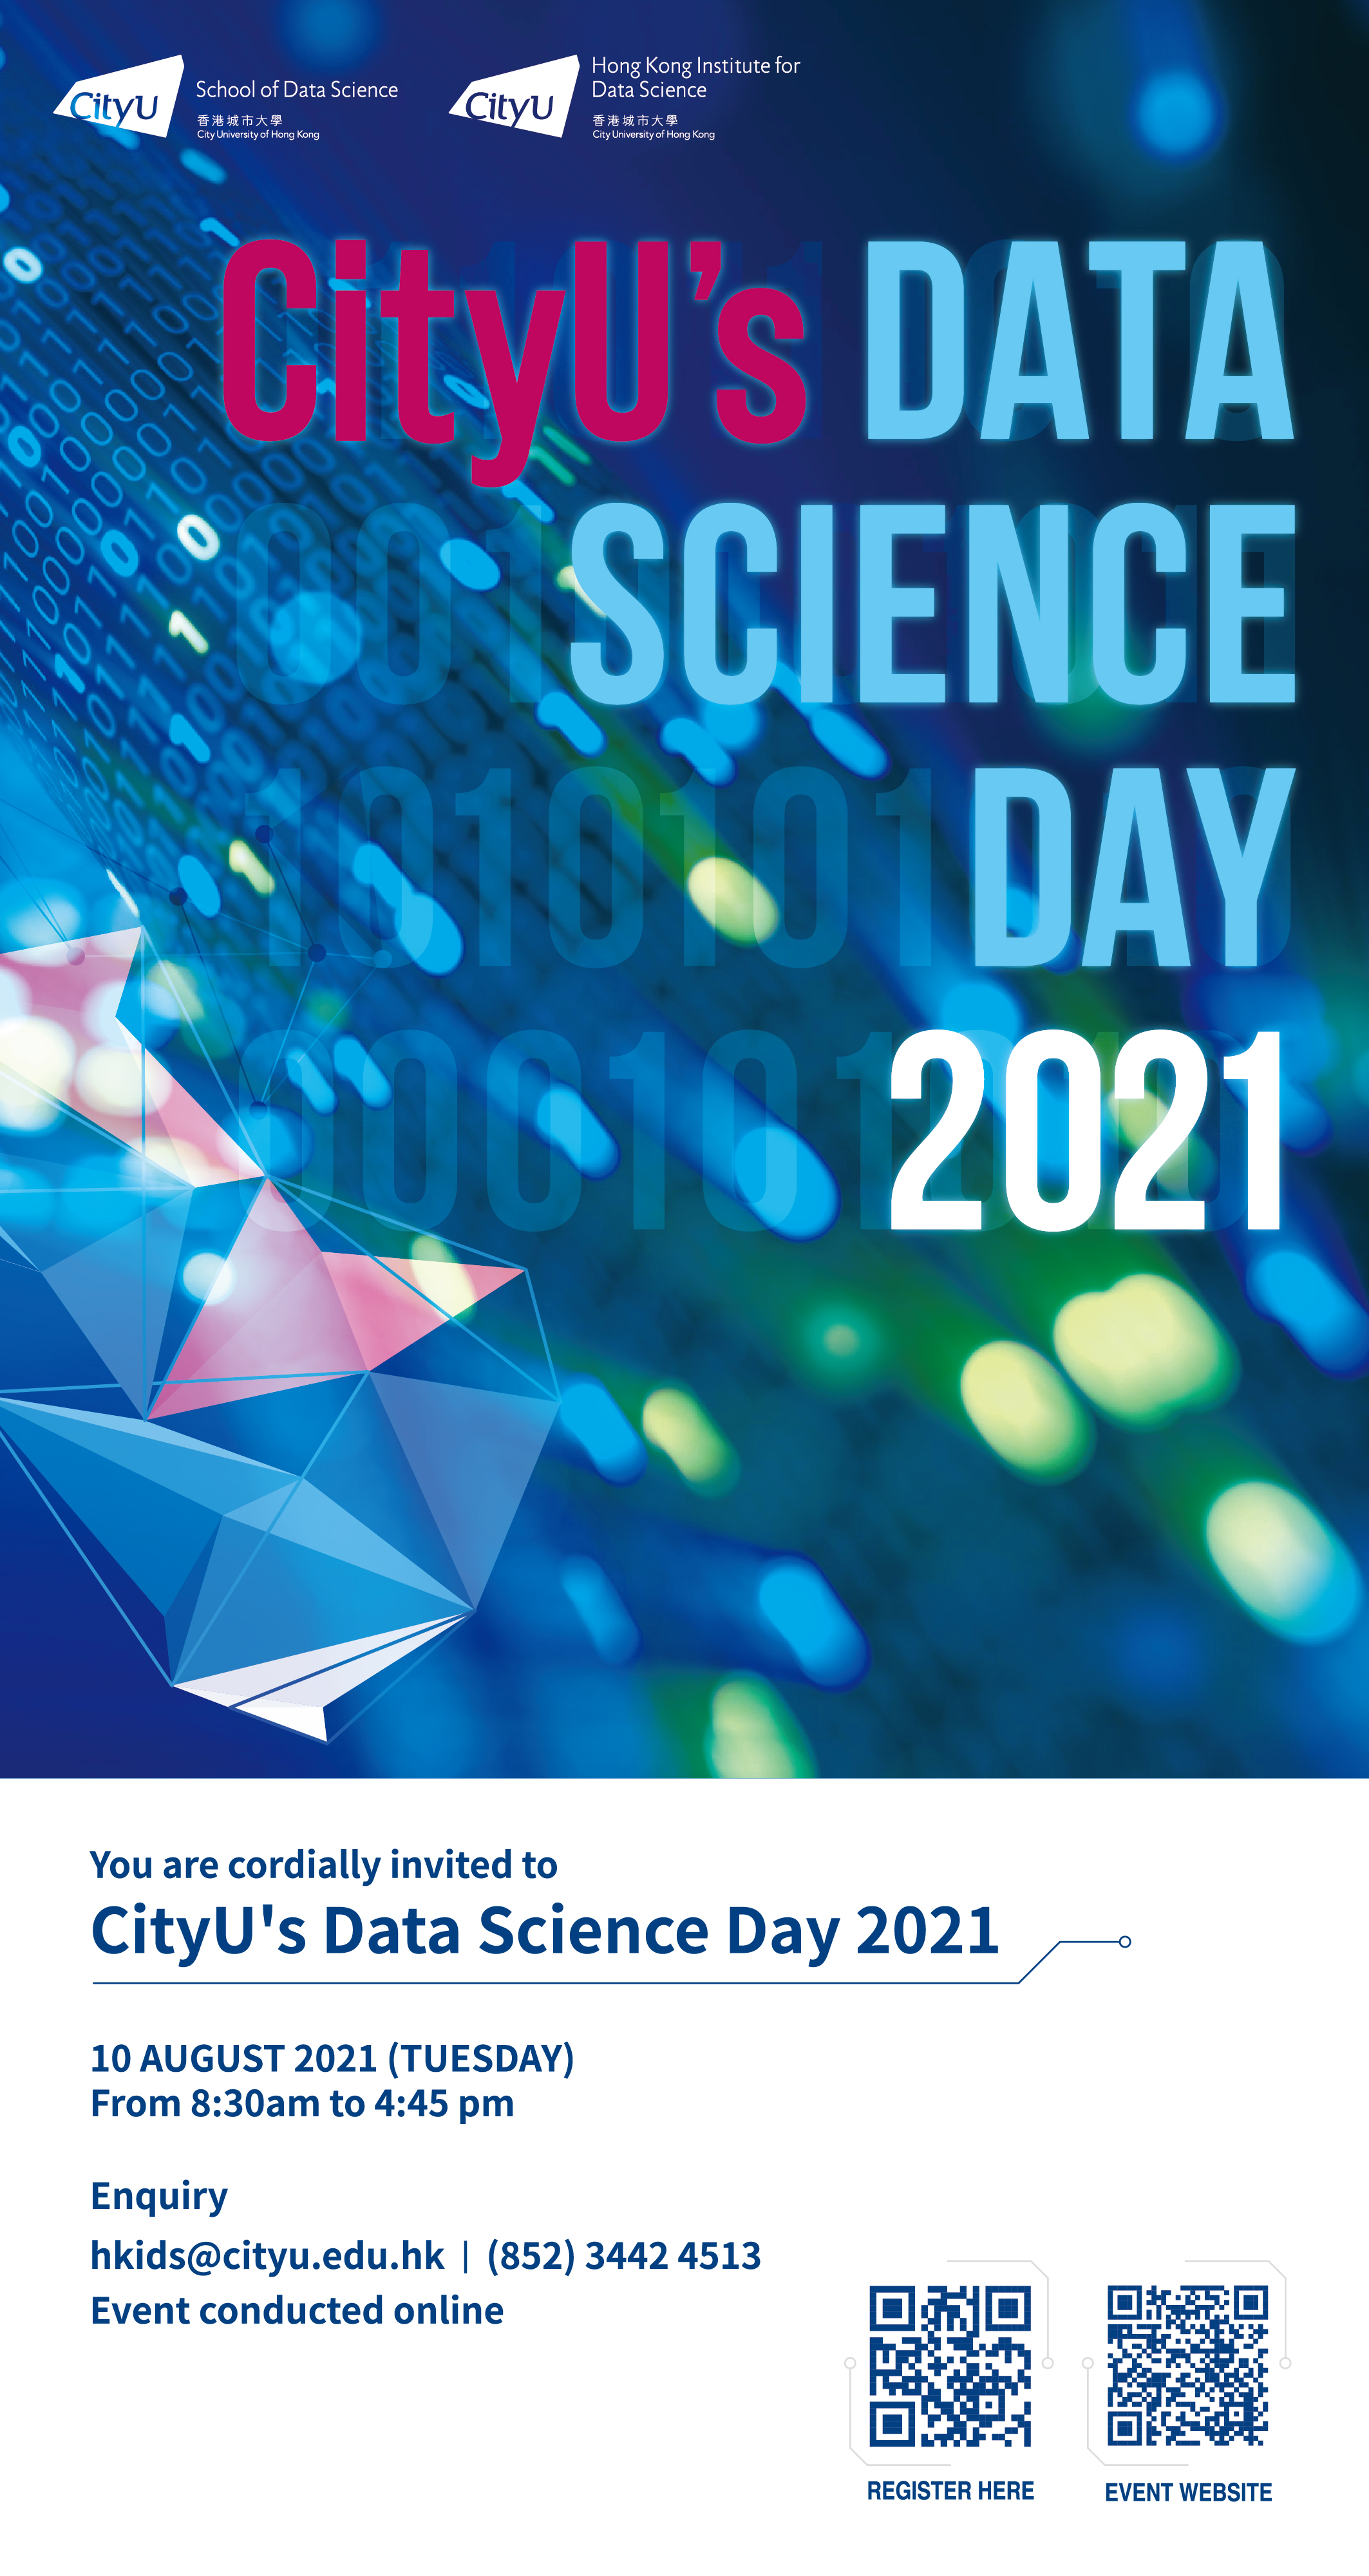 CityU's Data Science Day 2021